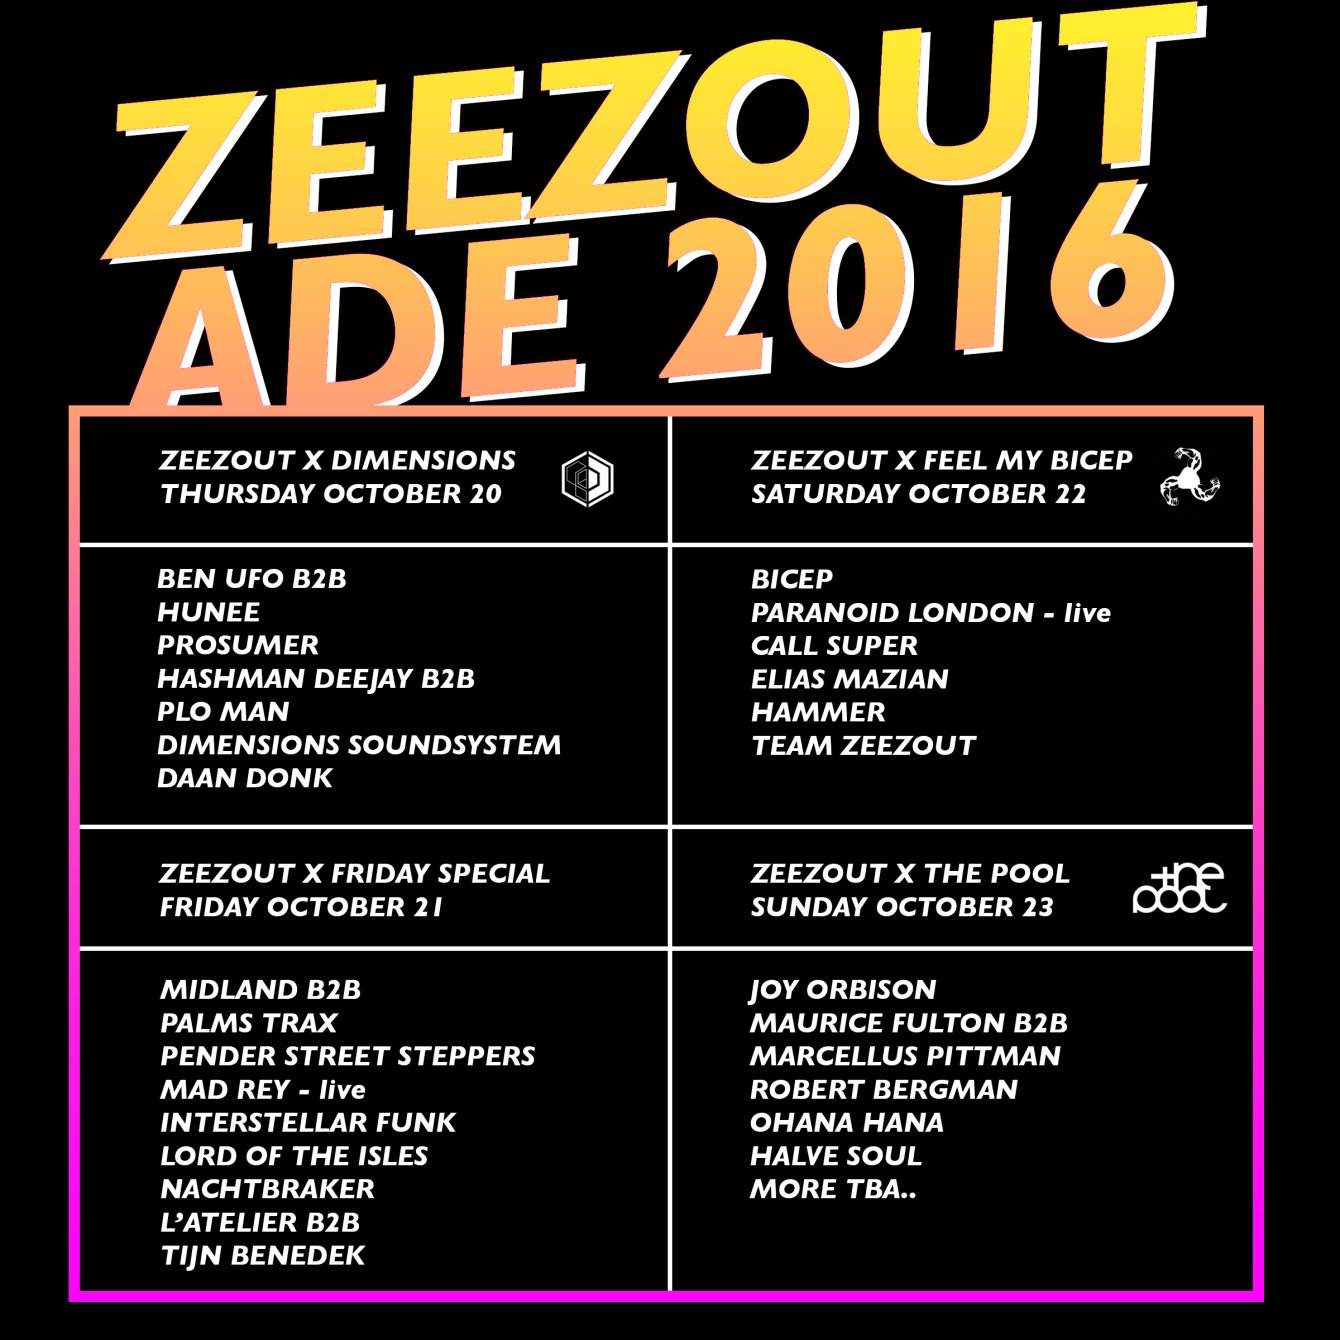 Zeezout & Dimensions ADE 2016: Ben UFO b2b Hunee 5hrs, Prosumer & More - フライヤー表